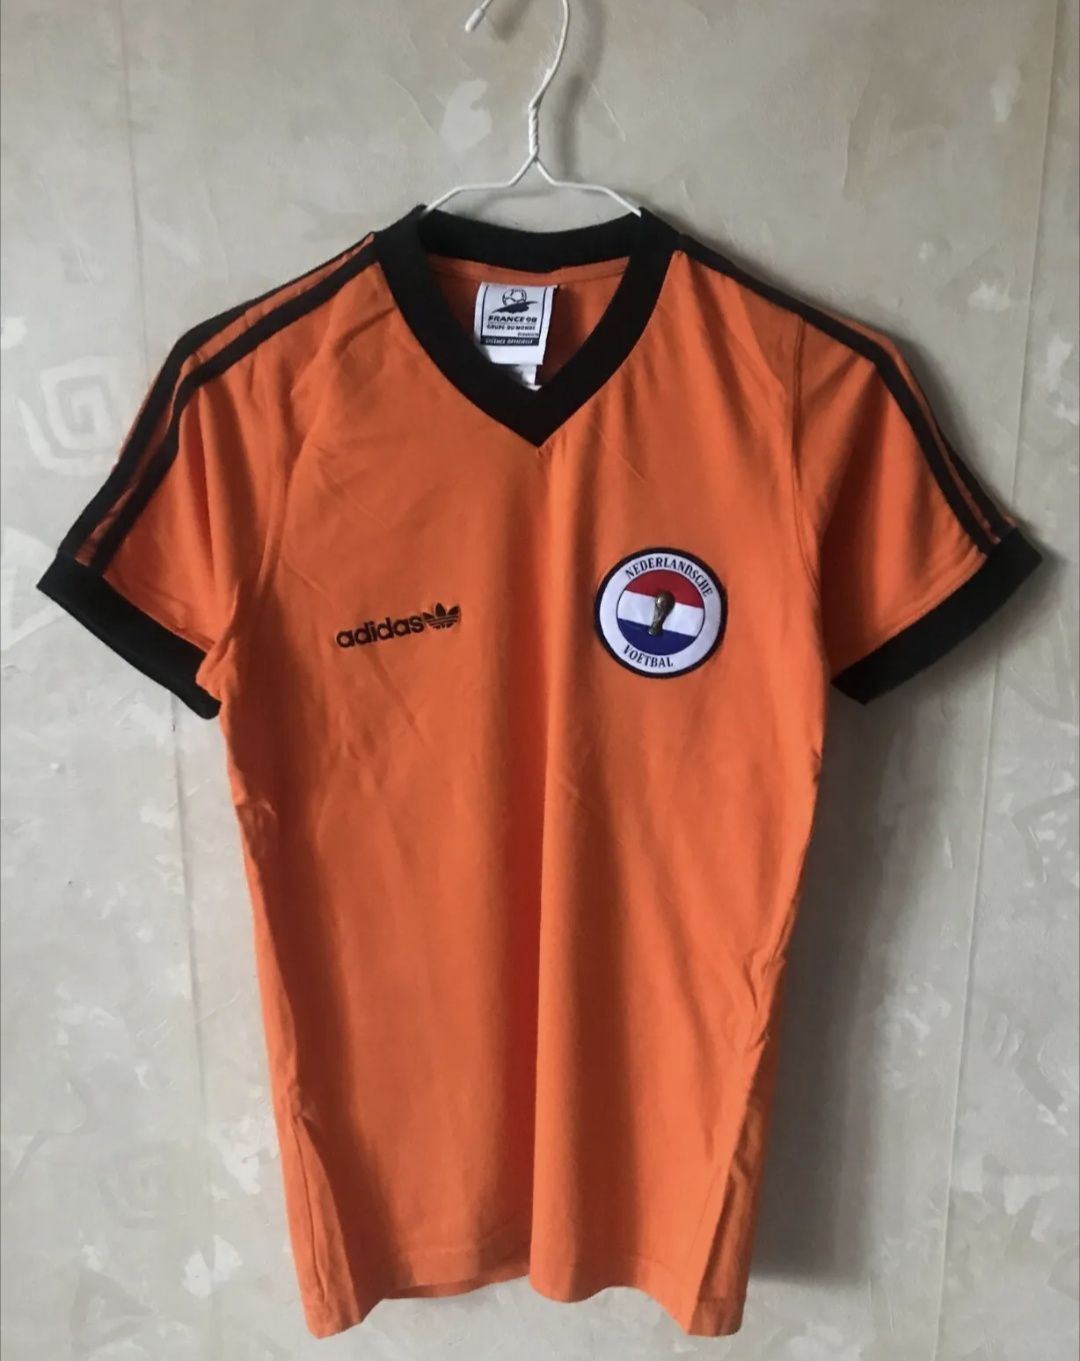 Holandia Netherlands World Cup 1998 adidas vintage tshirt